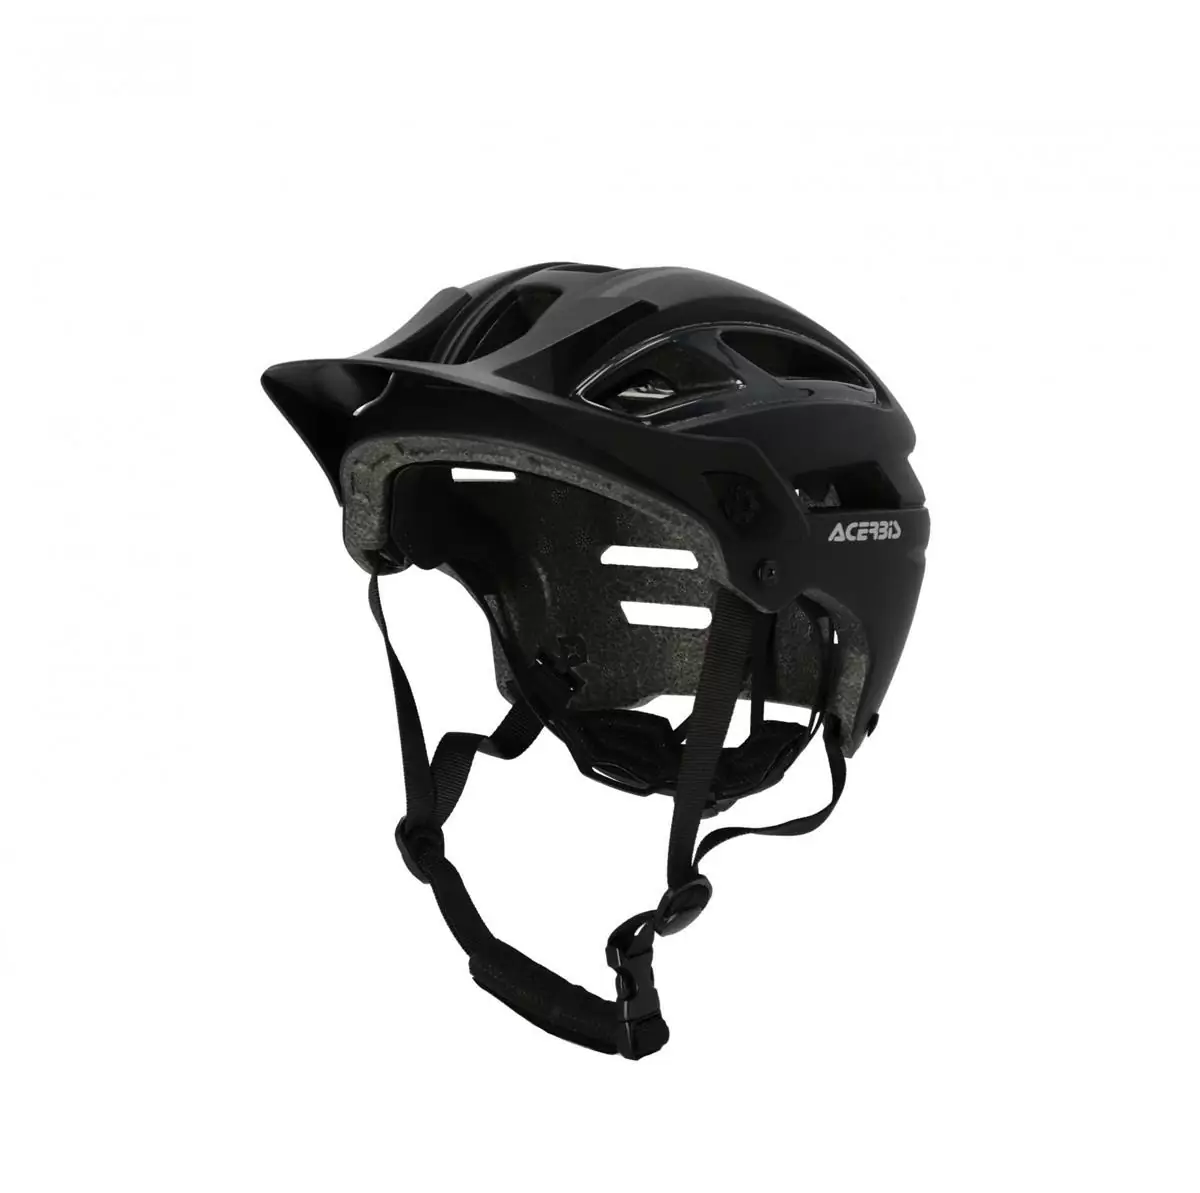 Helmet DoubleP black size S/M (53-58) - image